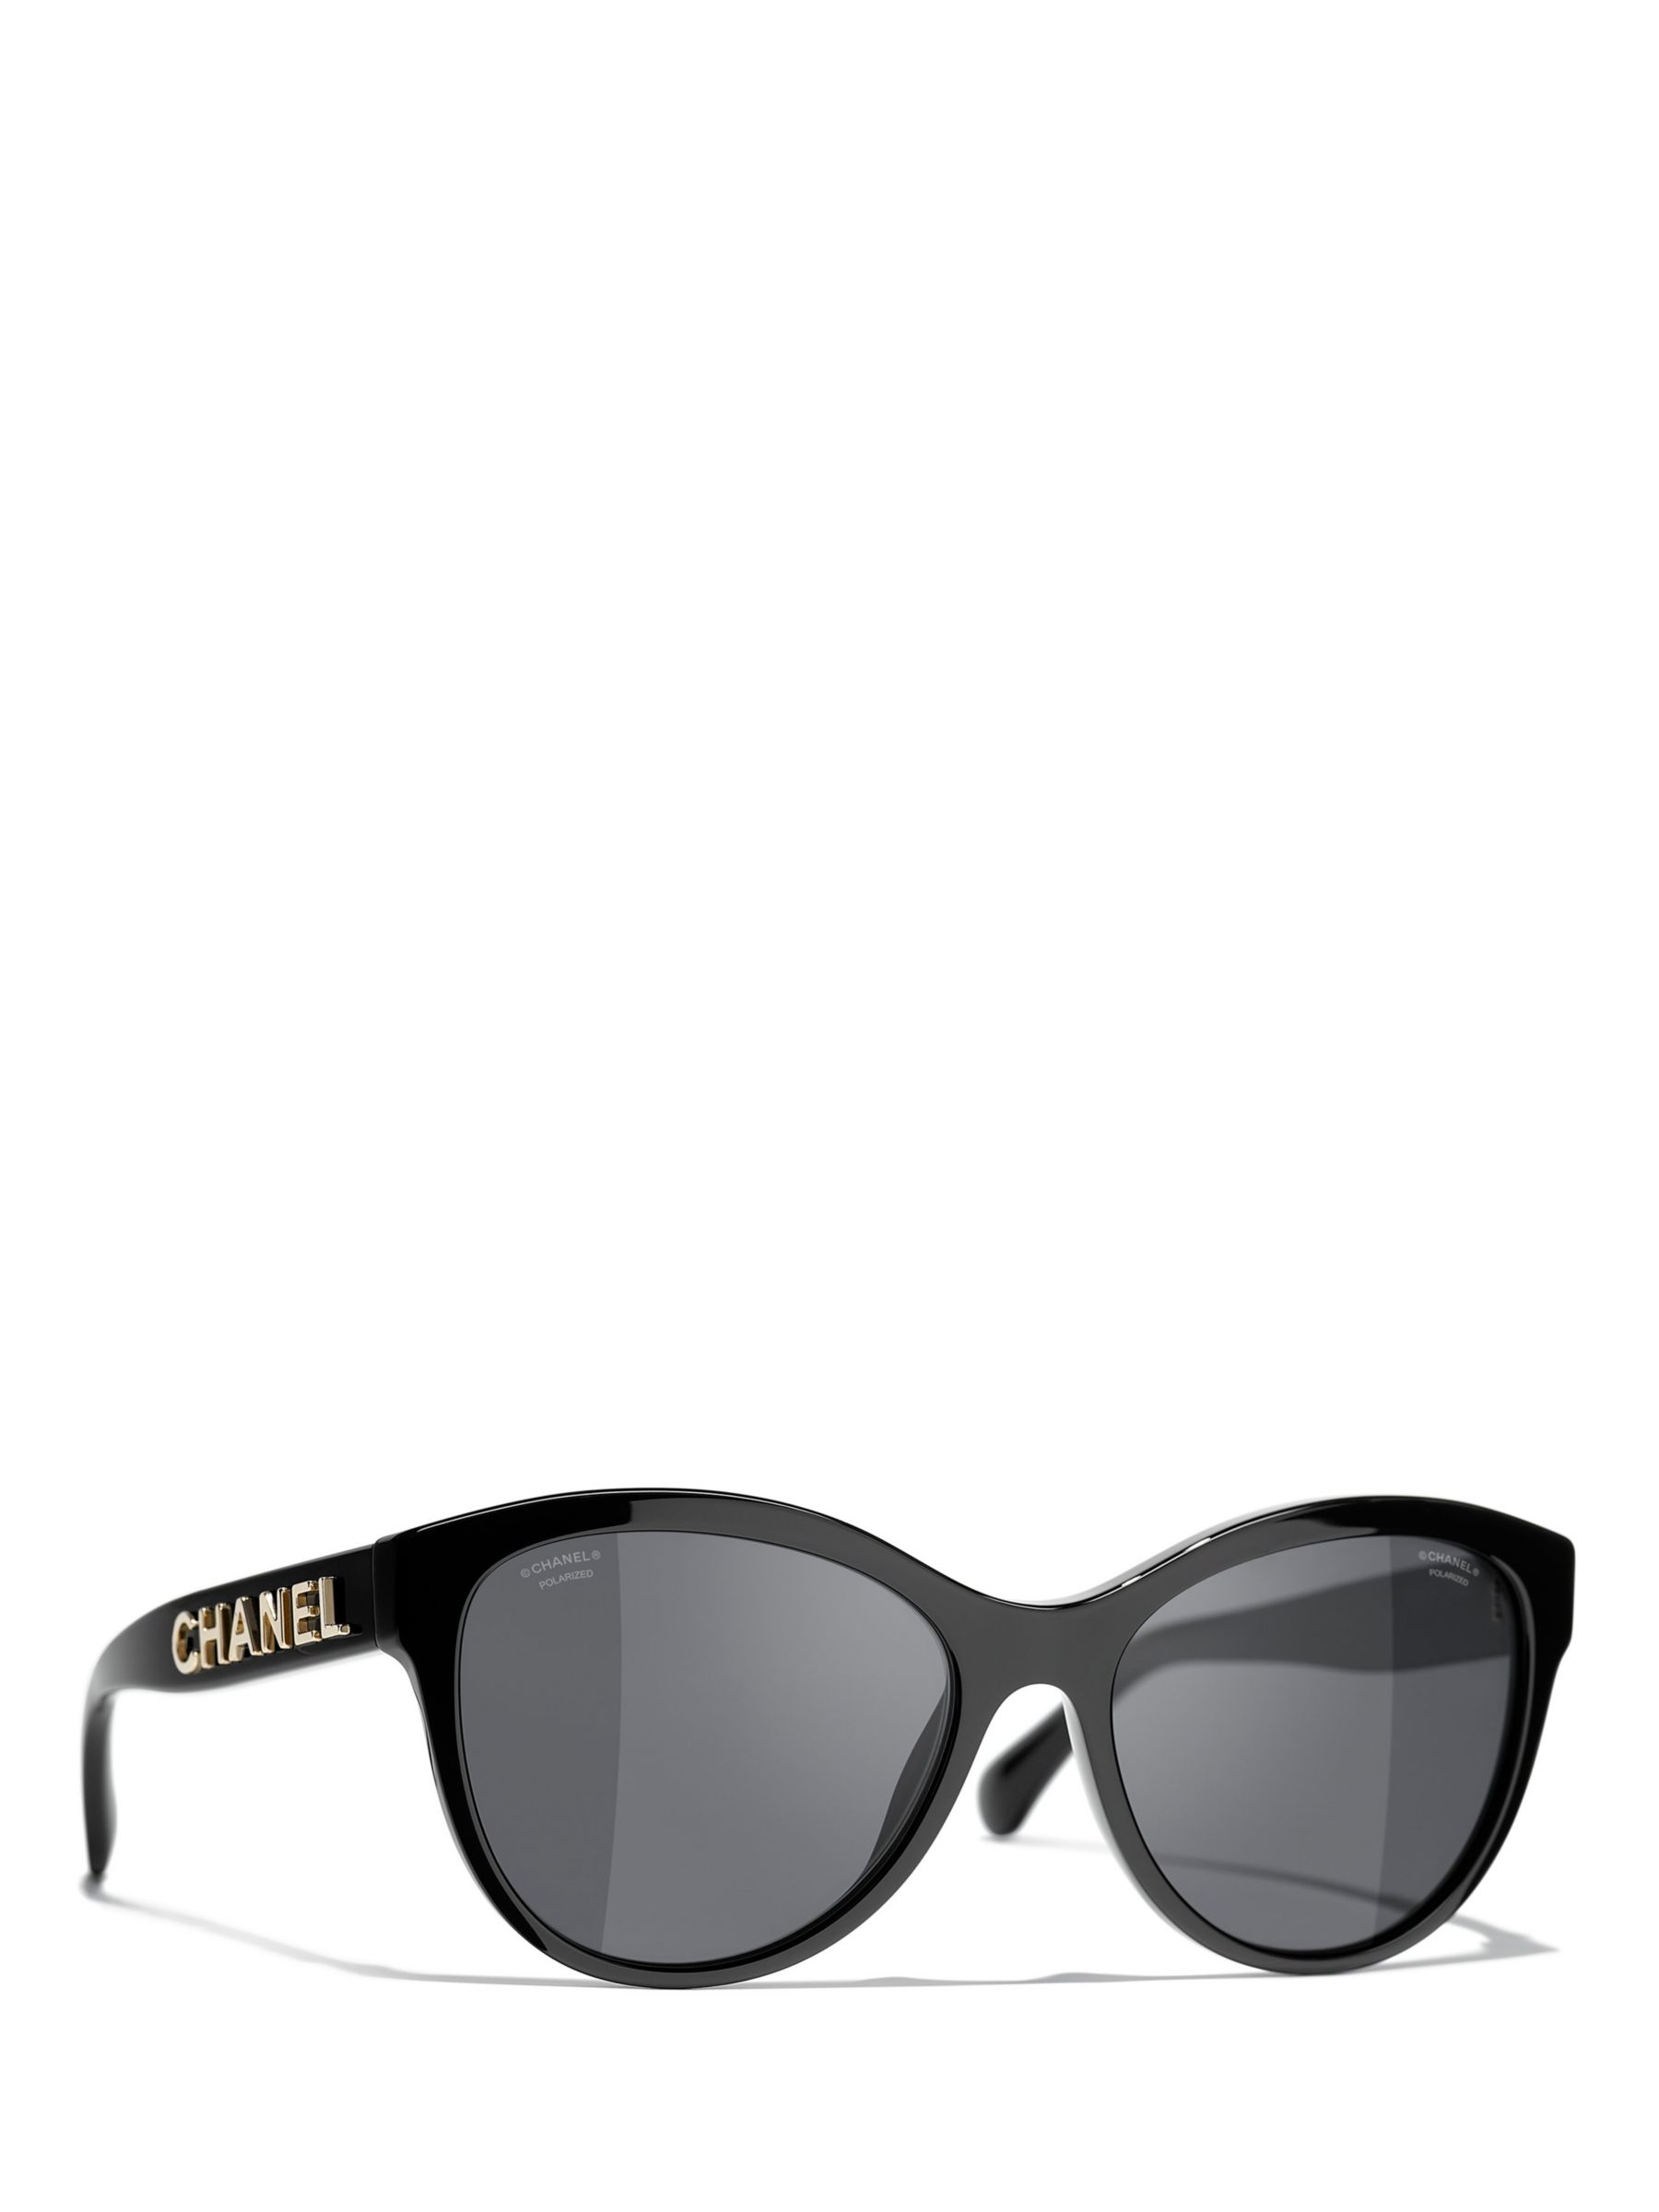 CHANEL CH5458 Women's Polarised Oval Sunglasses, Black/Grey at